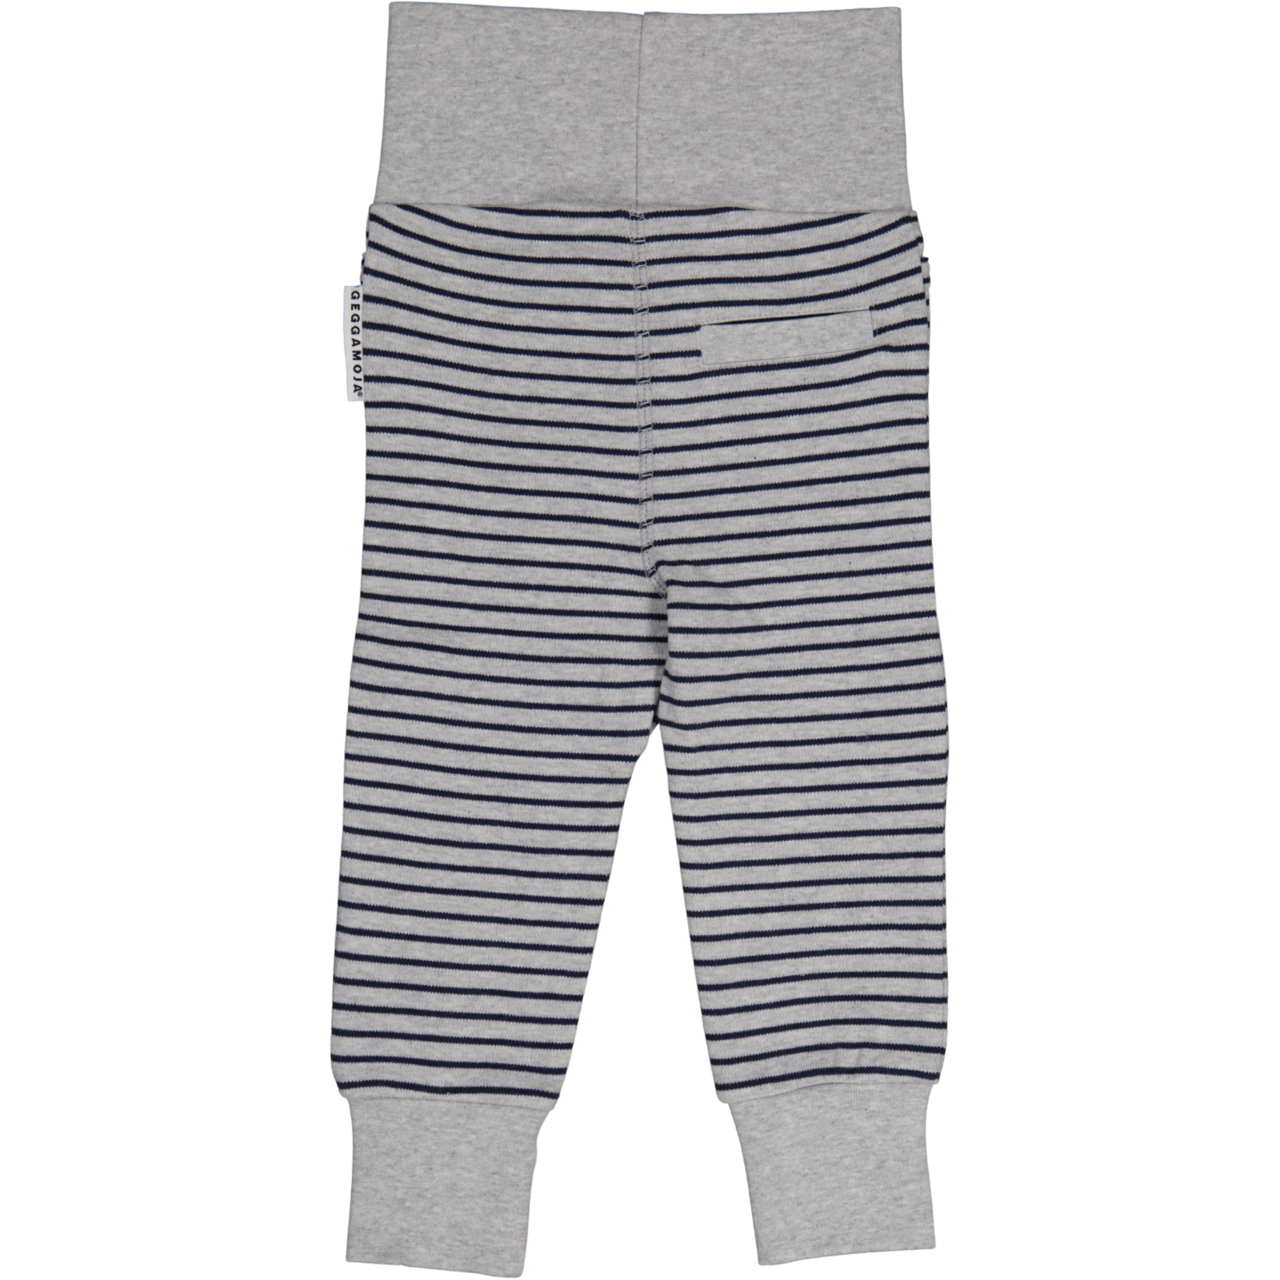 Baby trouser Grey mel/navy 74/80